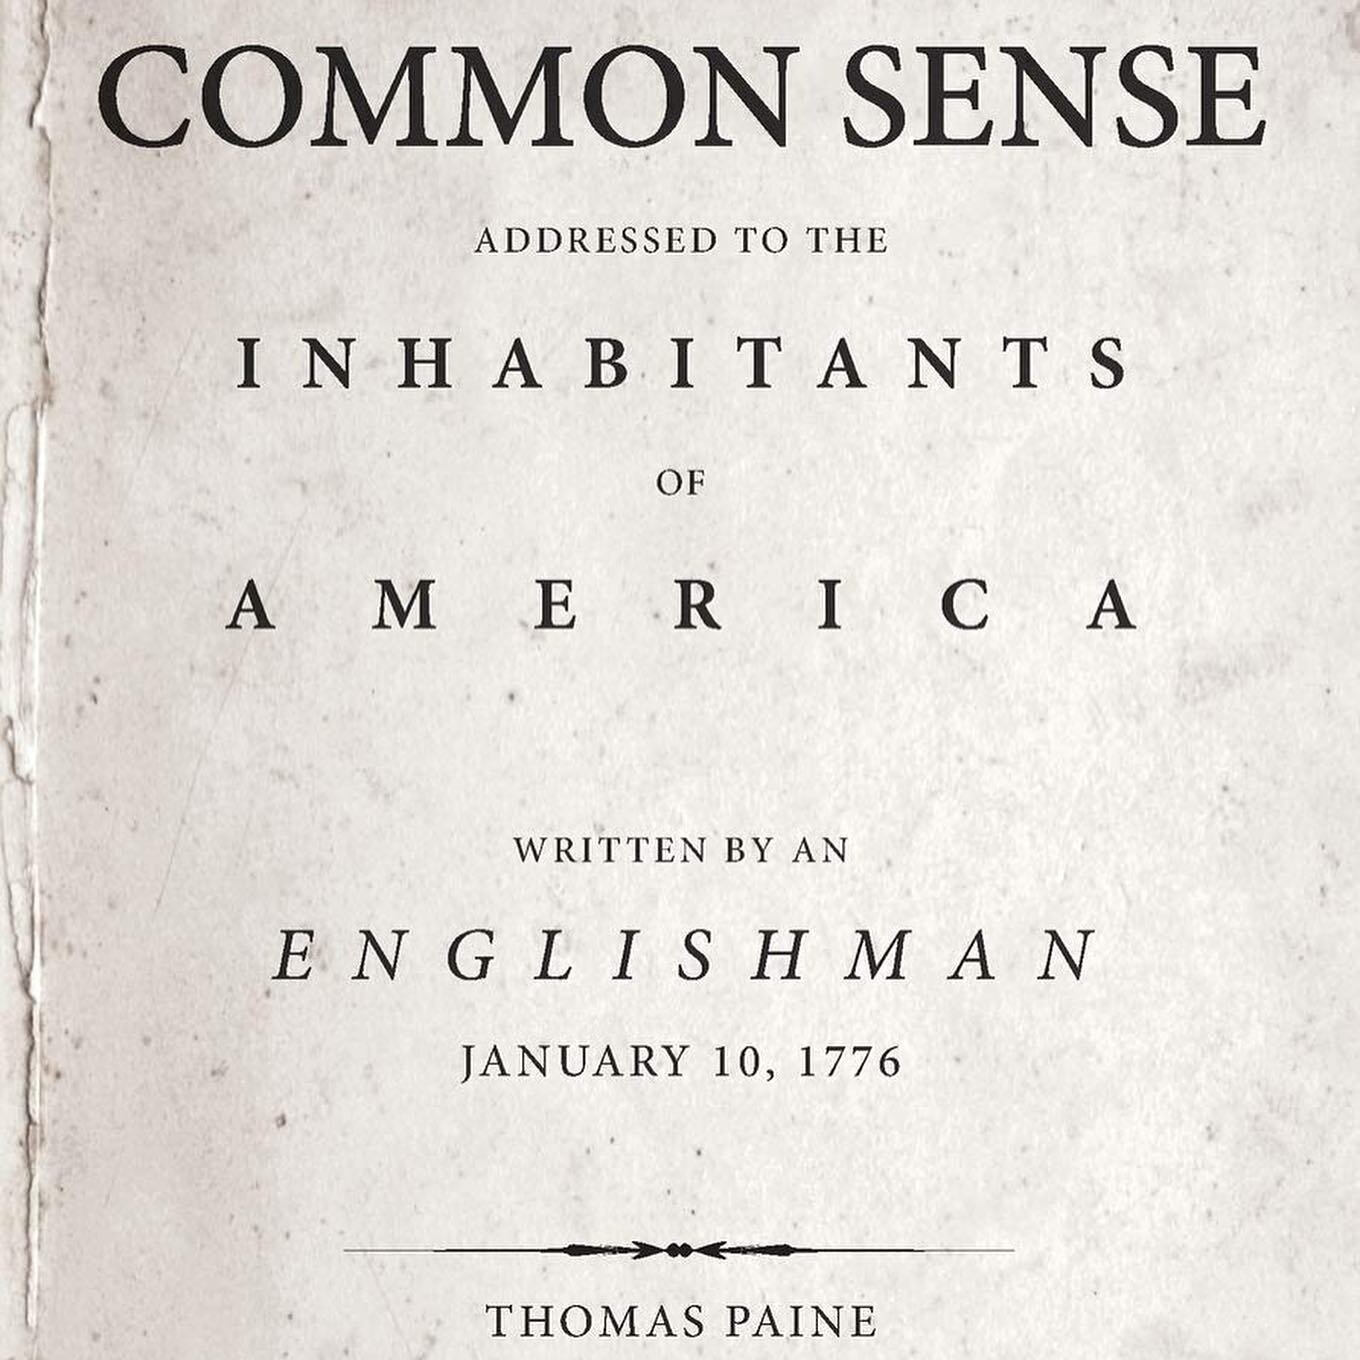 Thomas-Paine-American-Revolution-Parisology.jpg